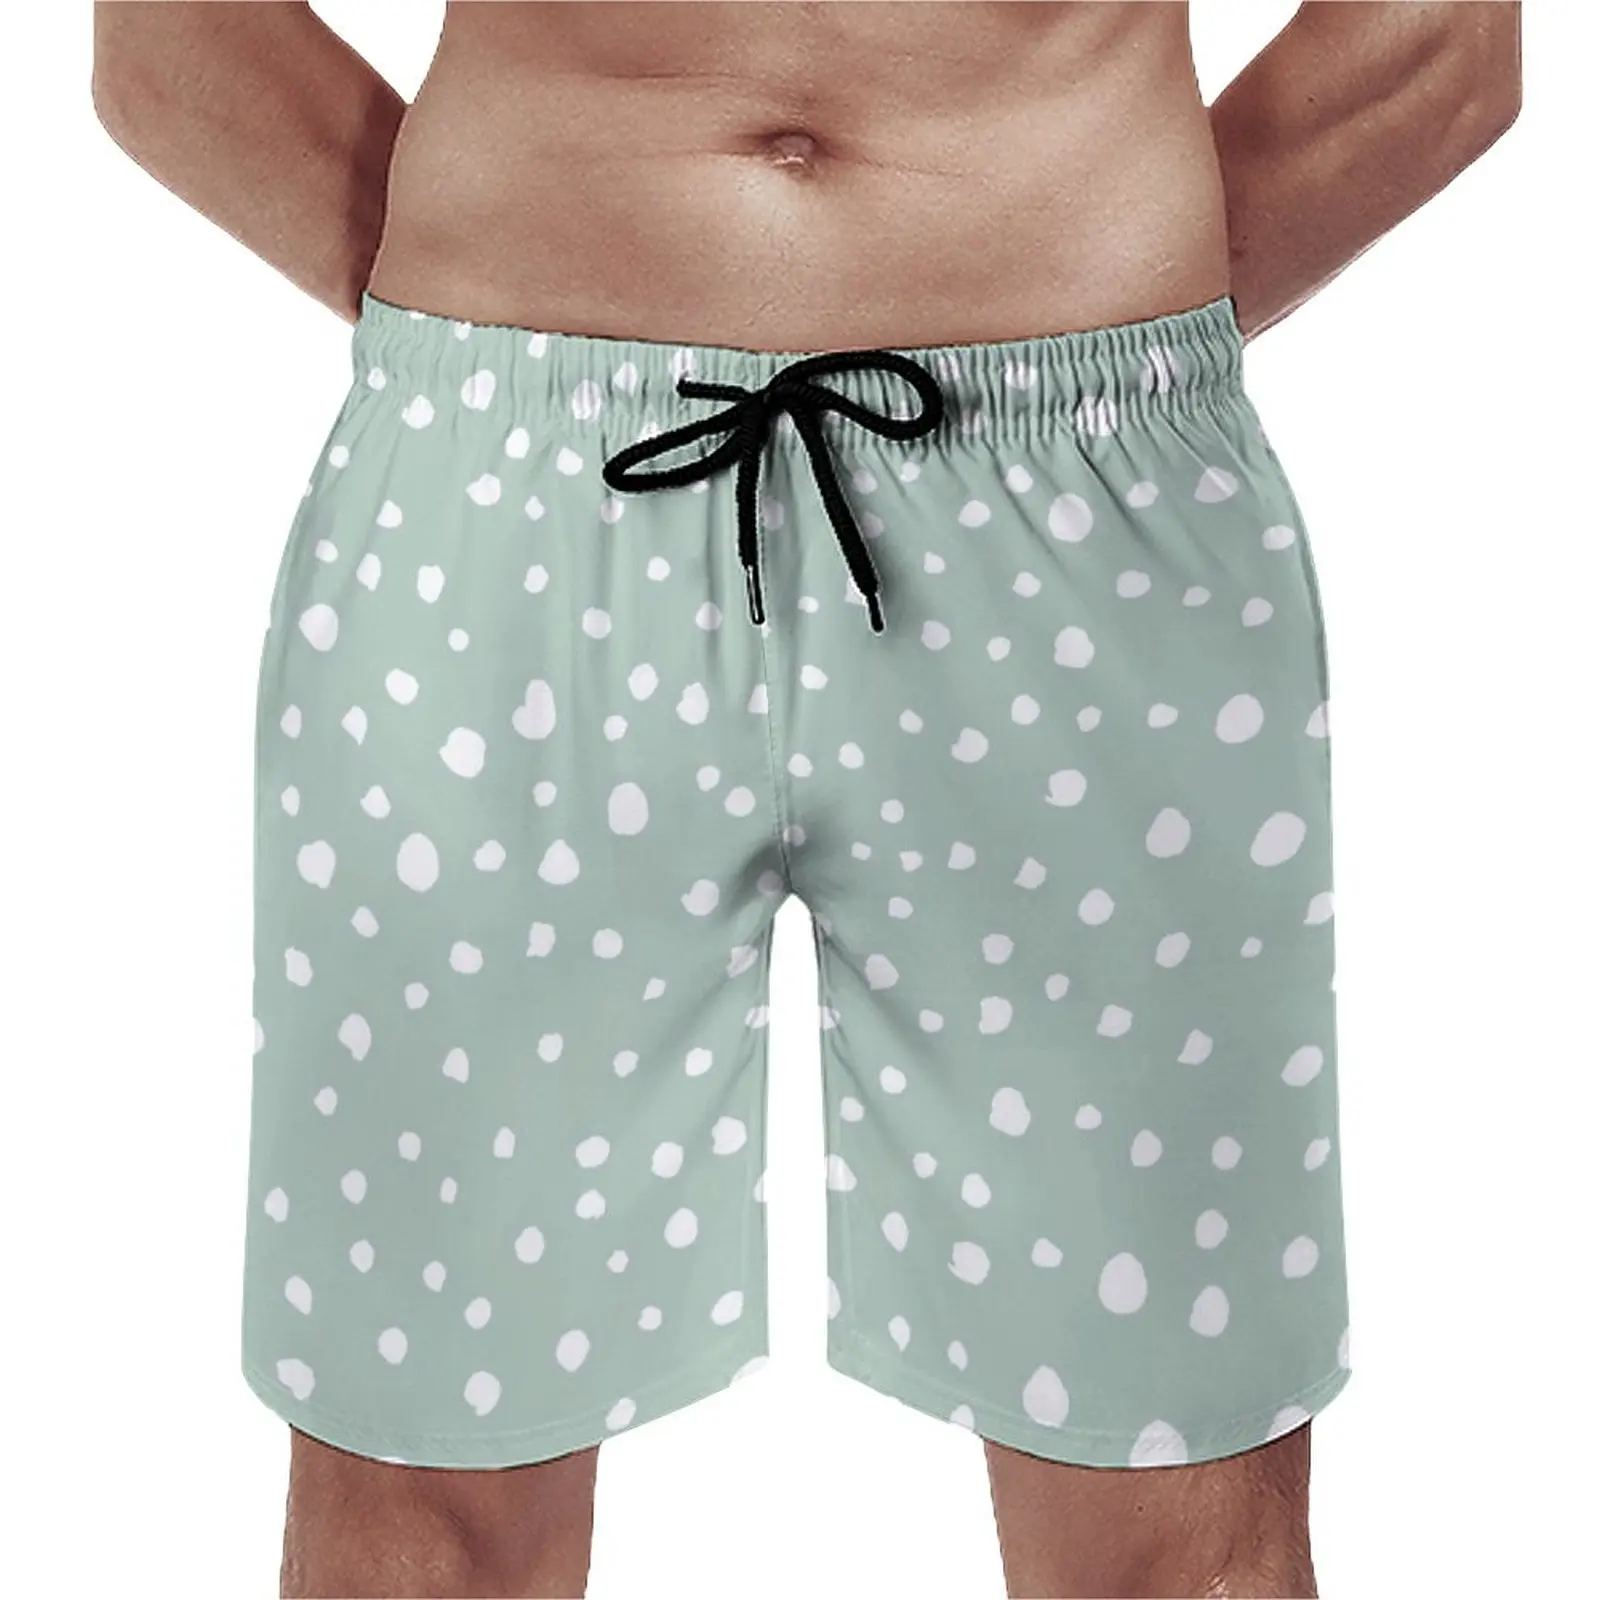 

Summer Board Shorts Dalmatian Spots Running White Dots Print Graphic Beach Short Pants Casual Comfortable Beach Trunks Plus Size